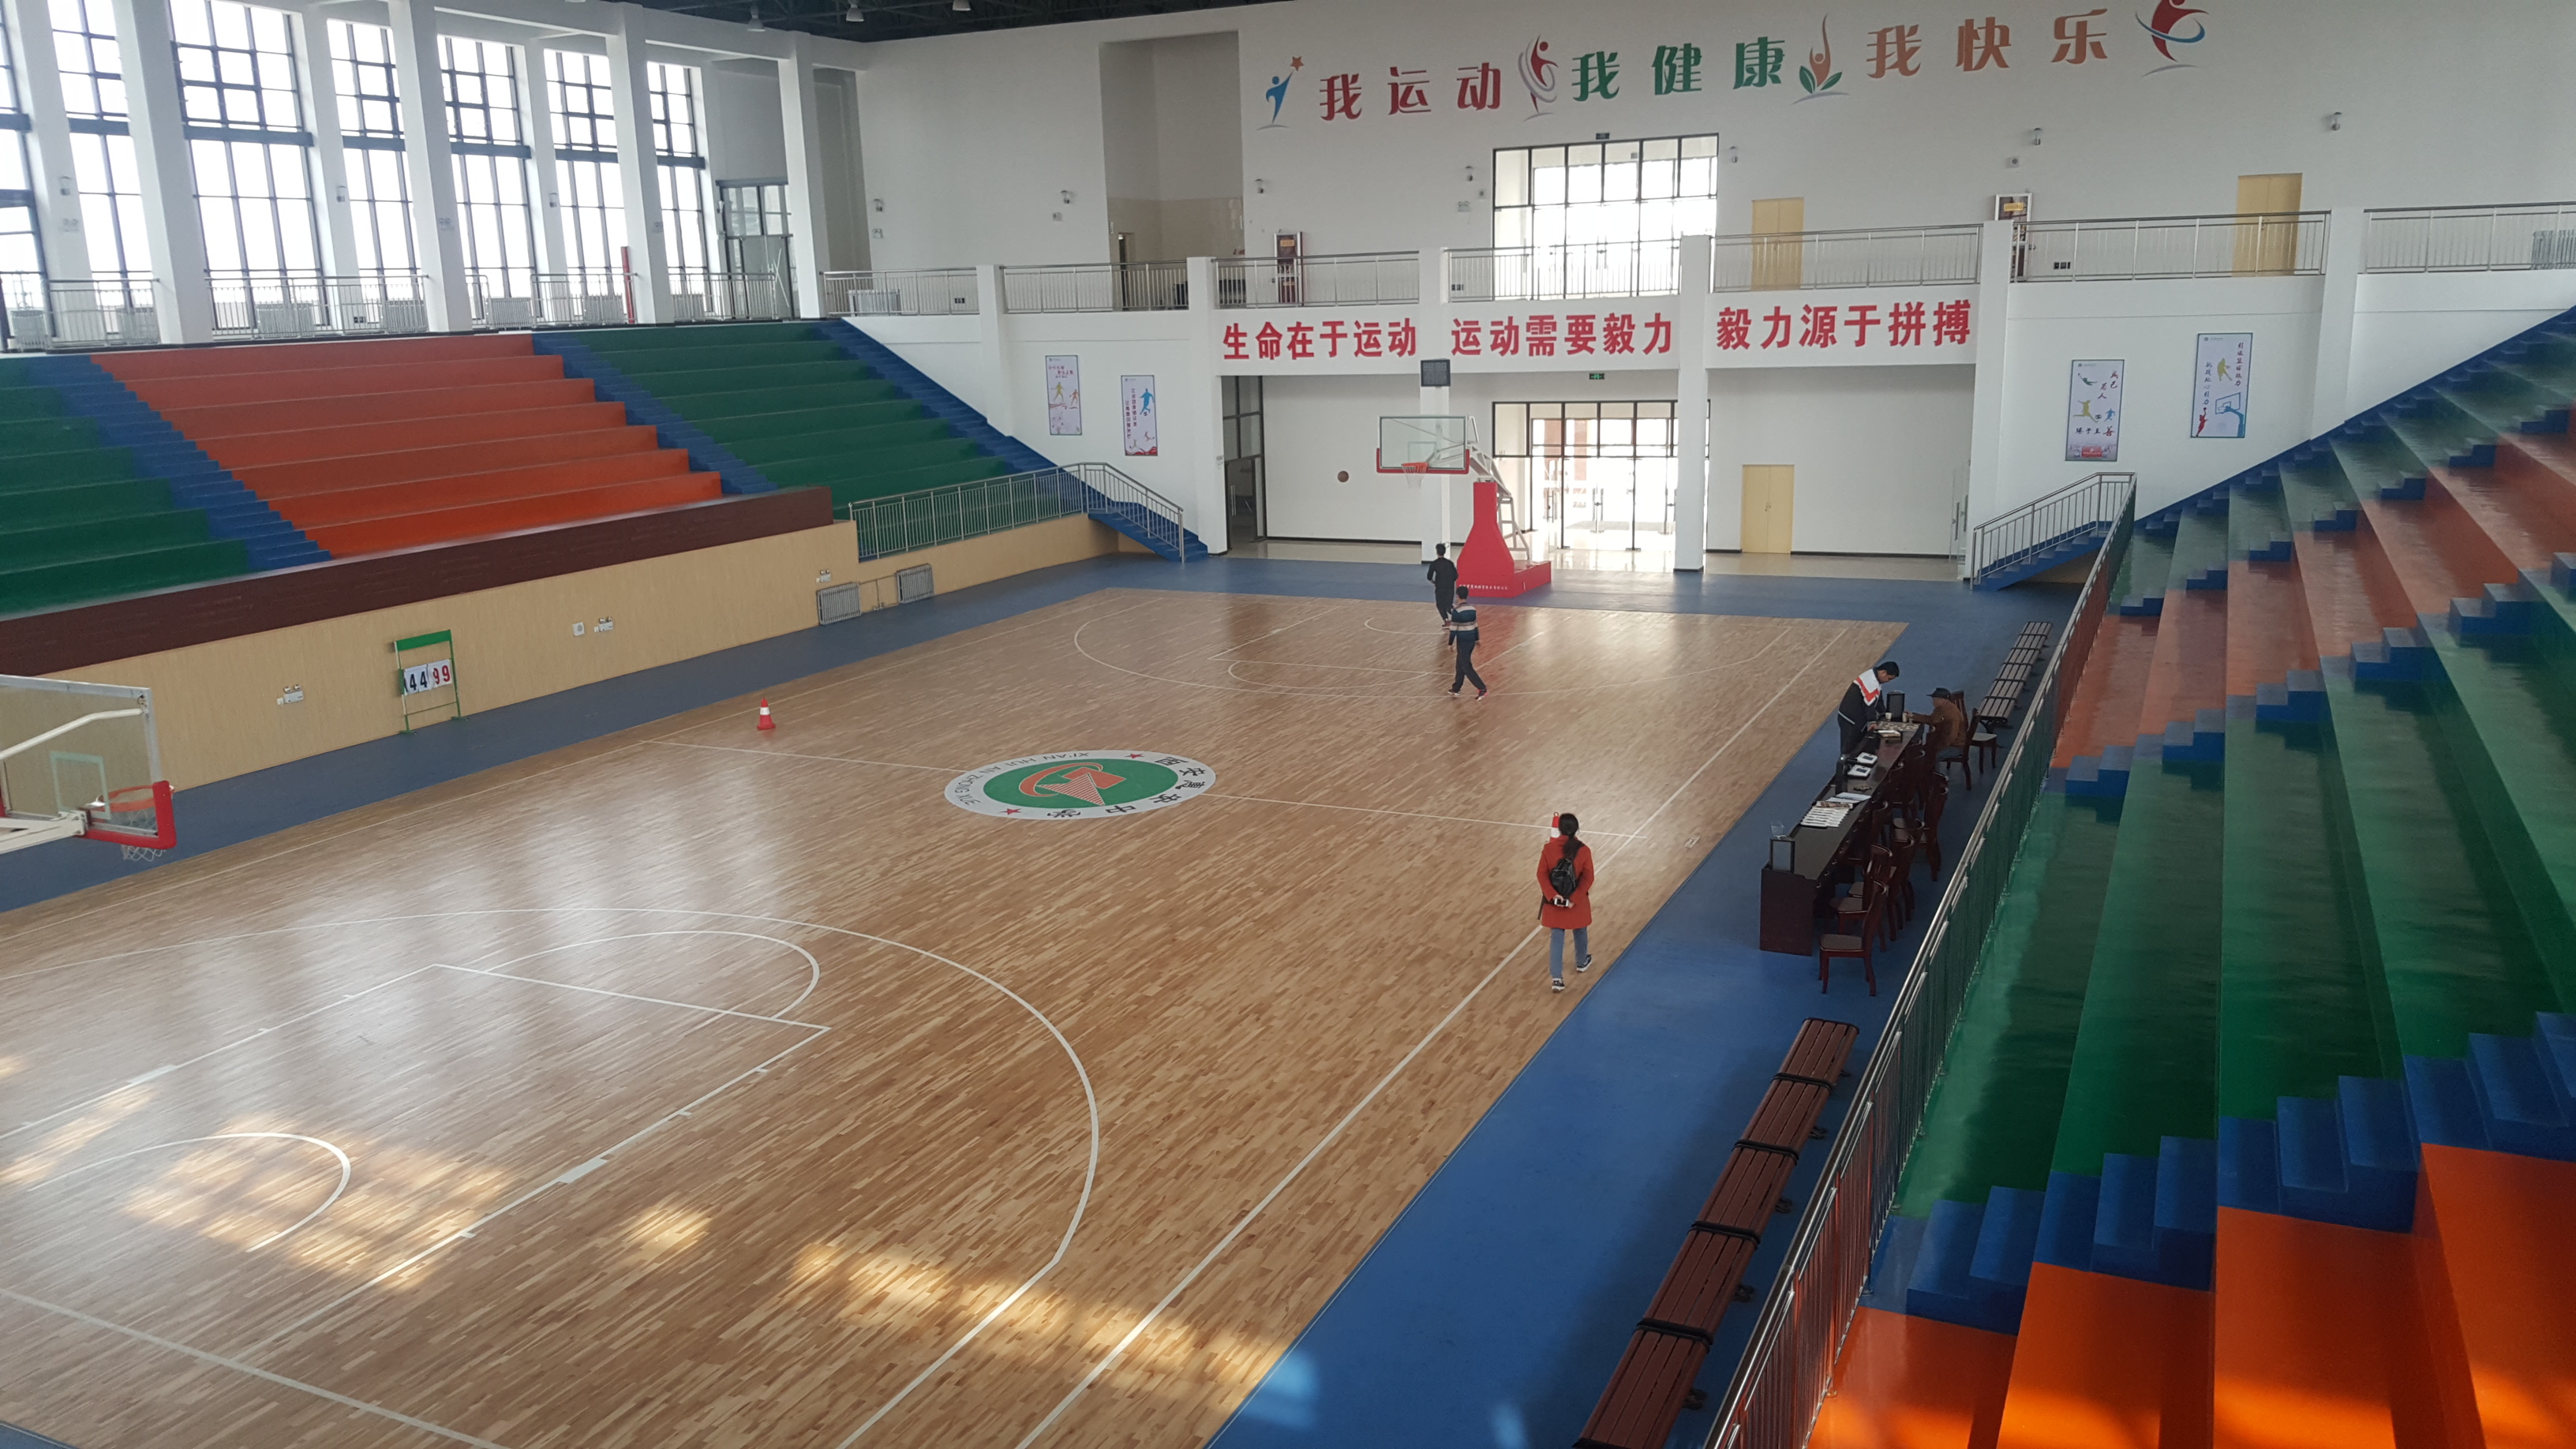 Huian Middle School Stadium.jpg